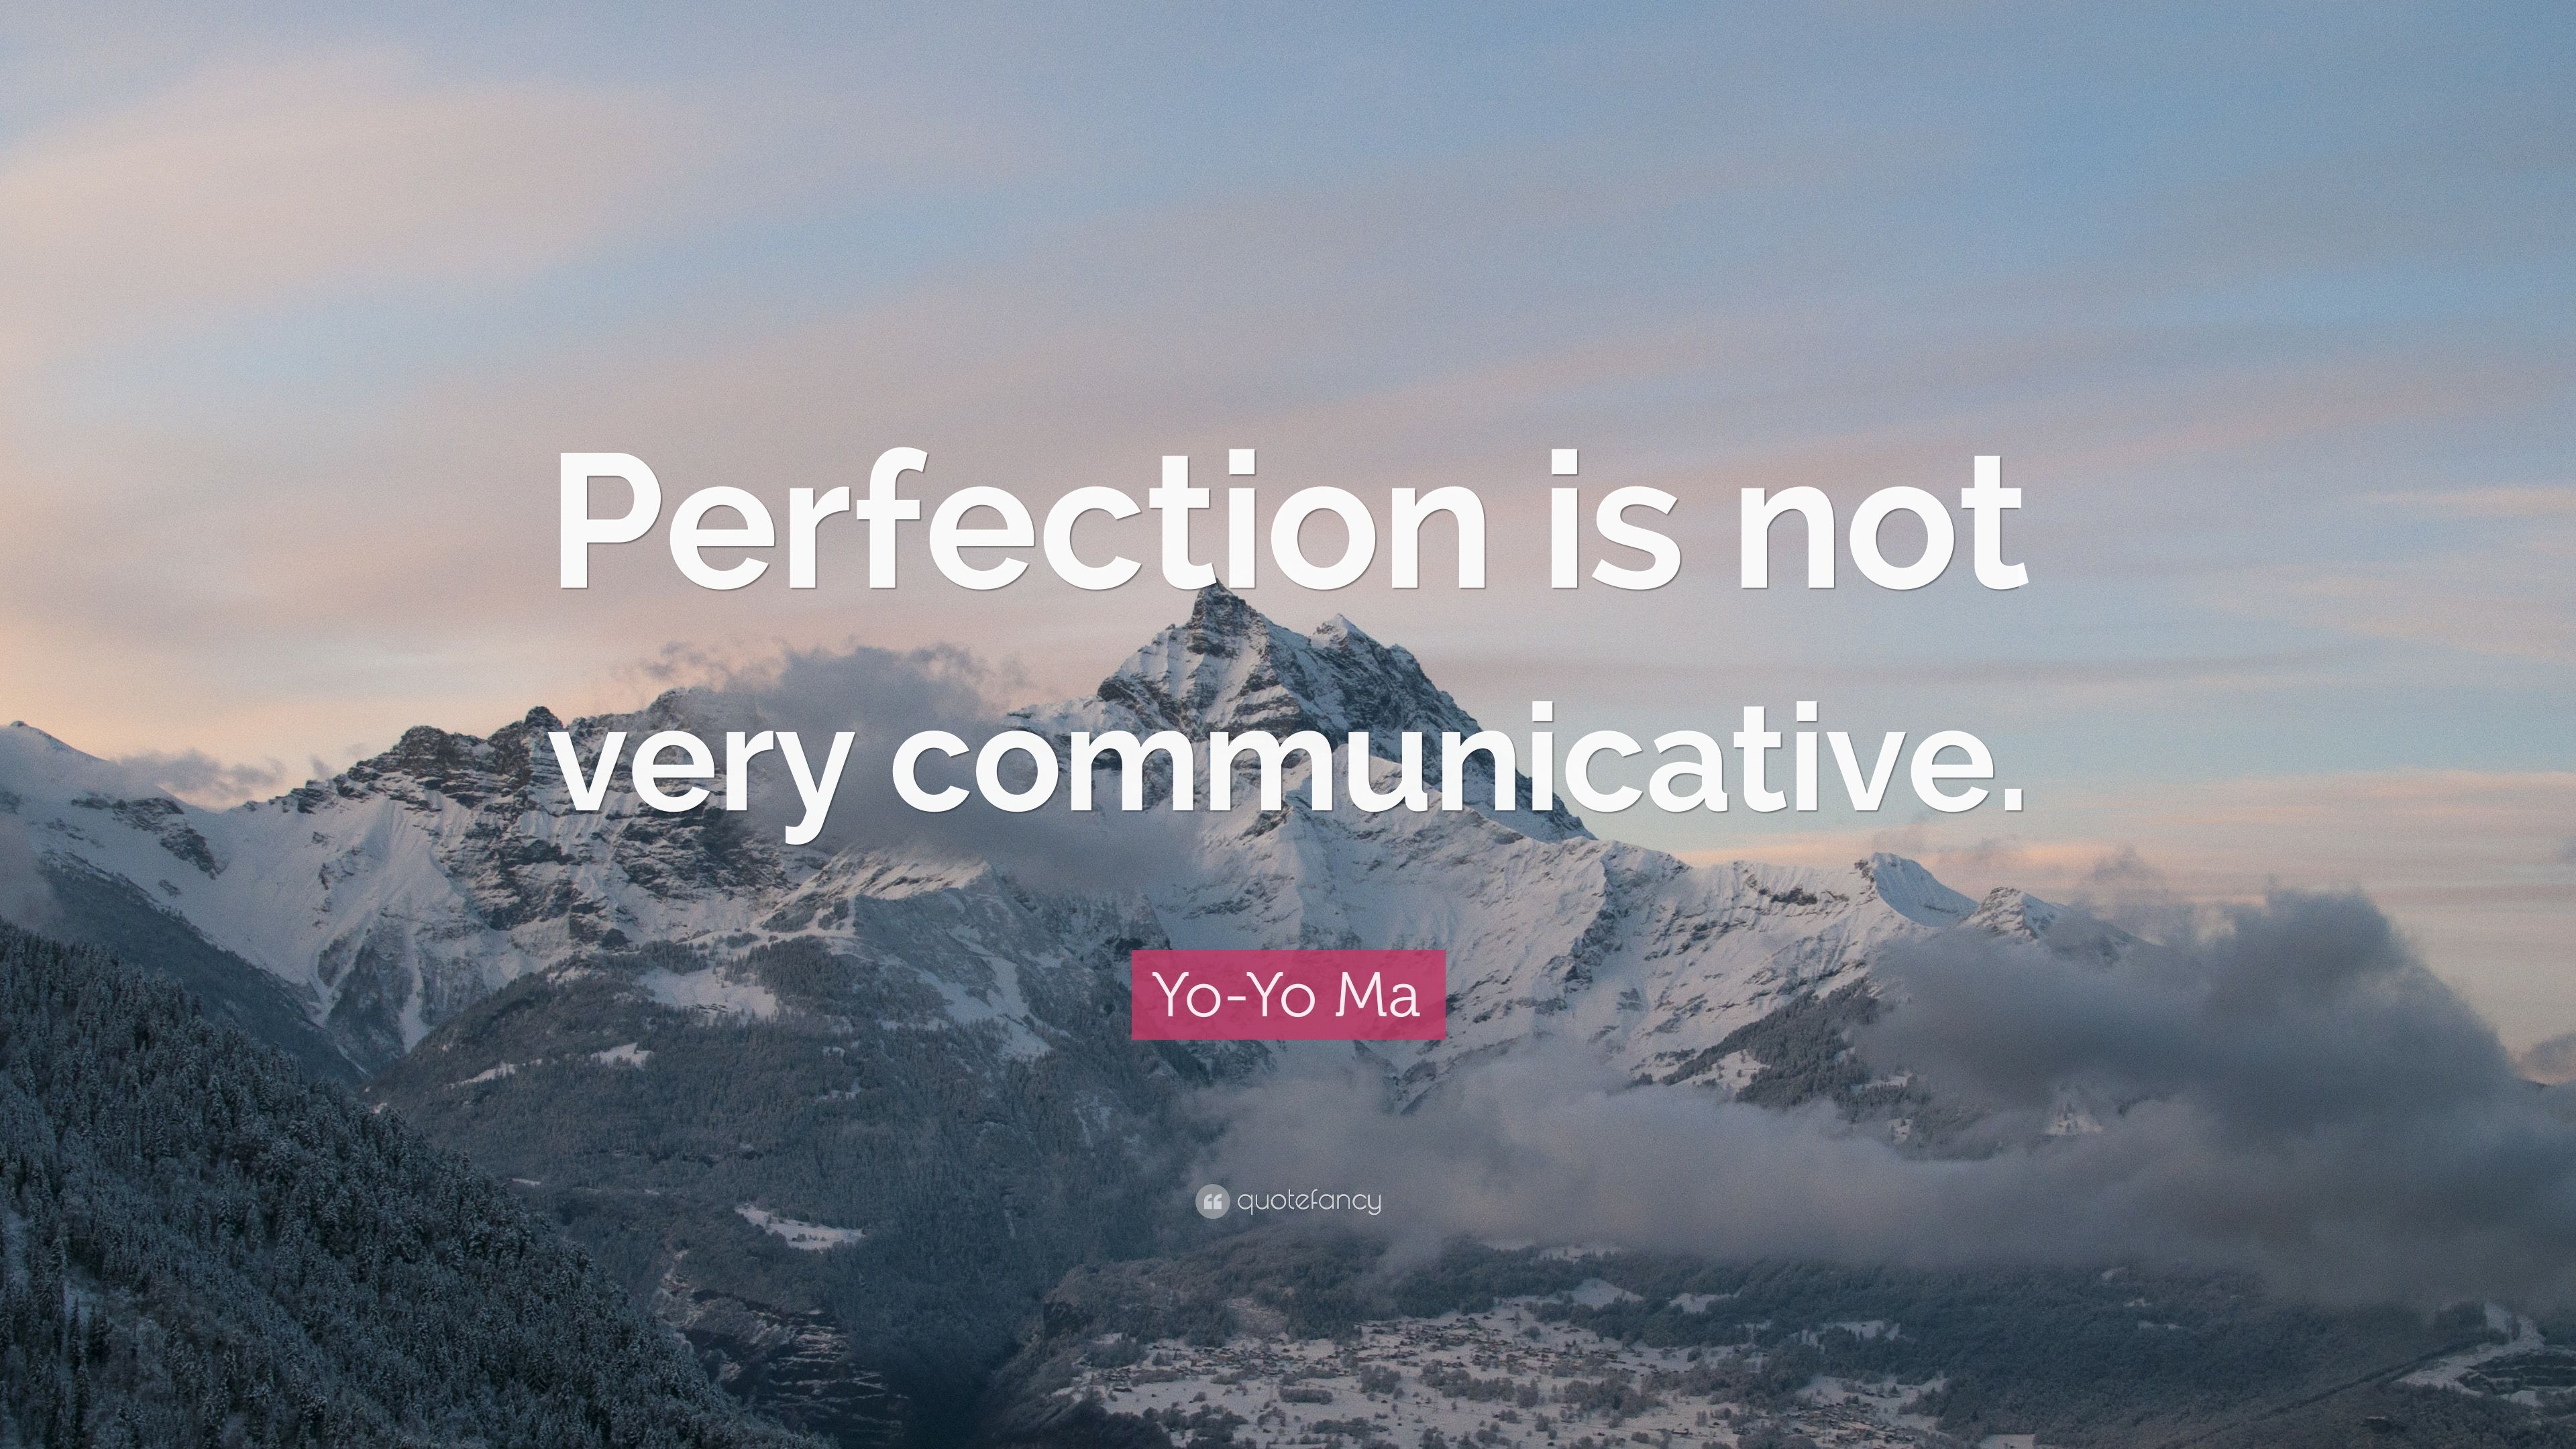 Yo Yo Ma Quote: “Perfection Is Not Very Communicative.” 7